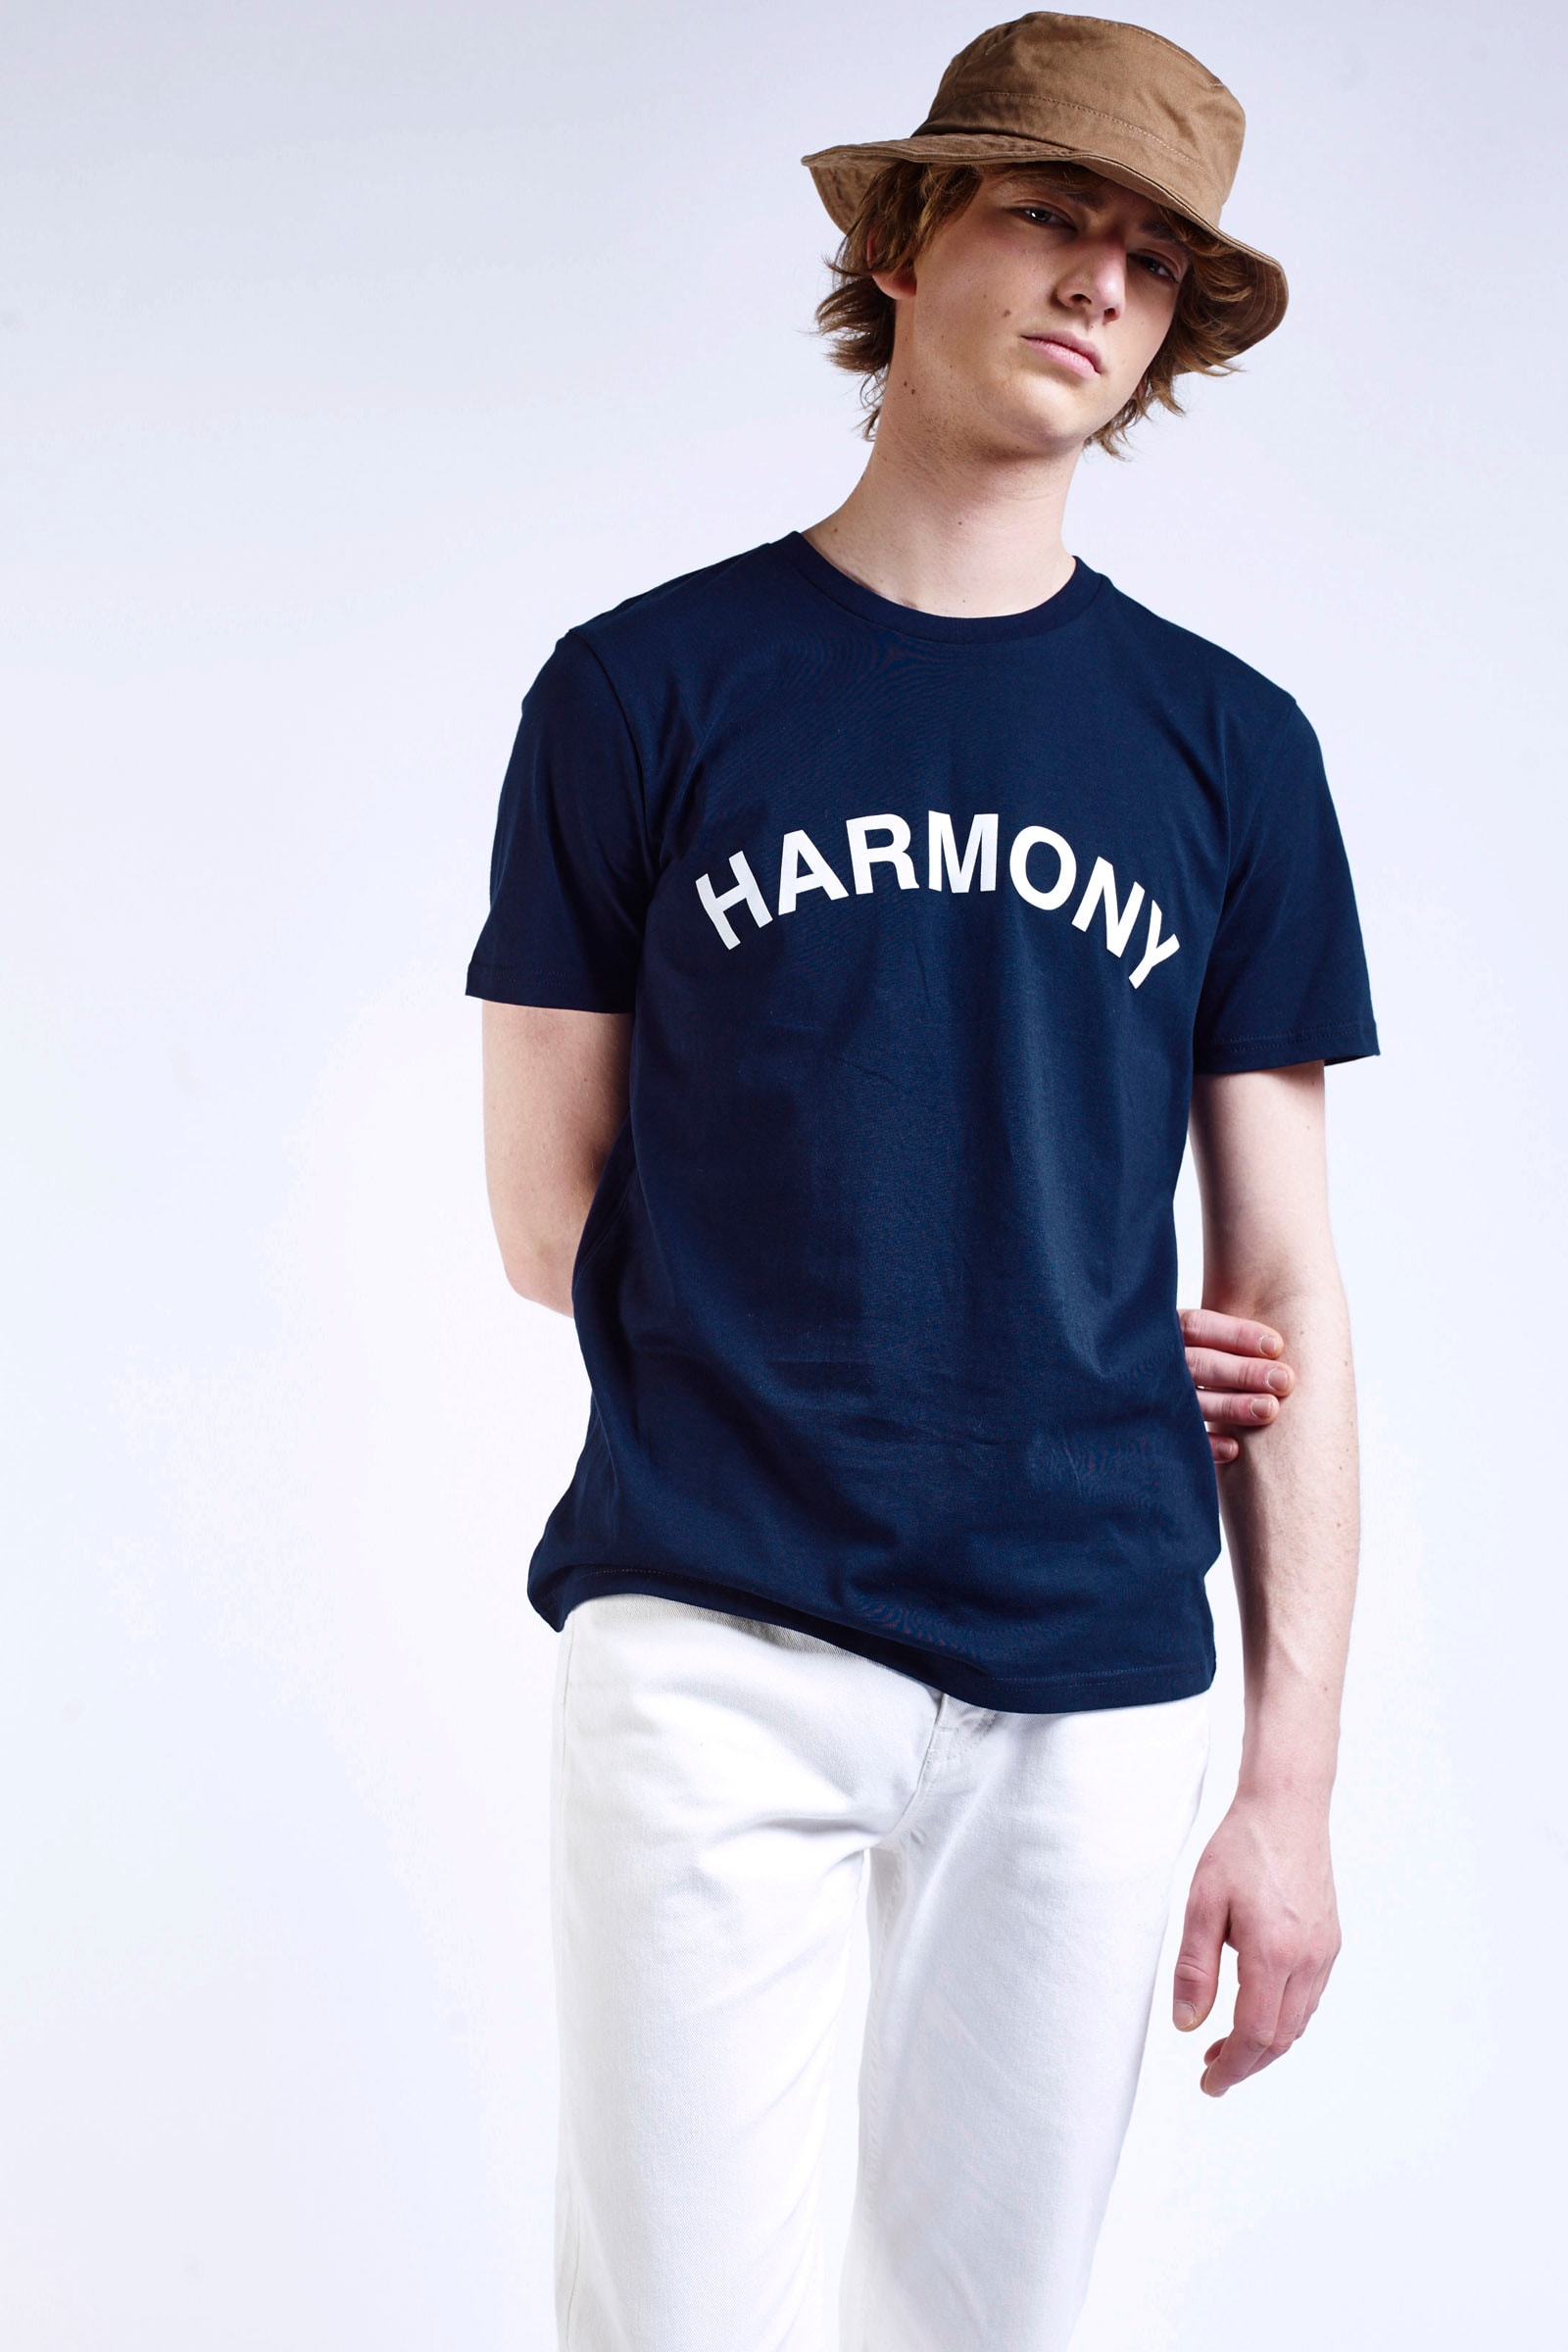 Harmony Collection Printemps Été 2019 lookbook